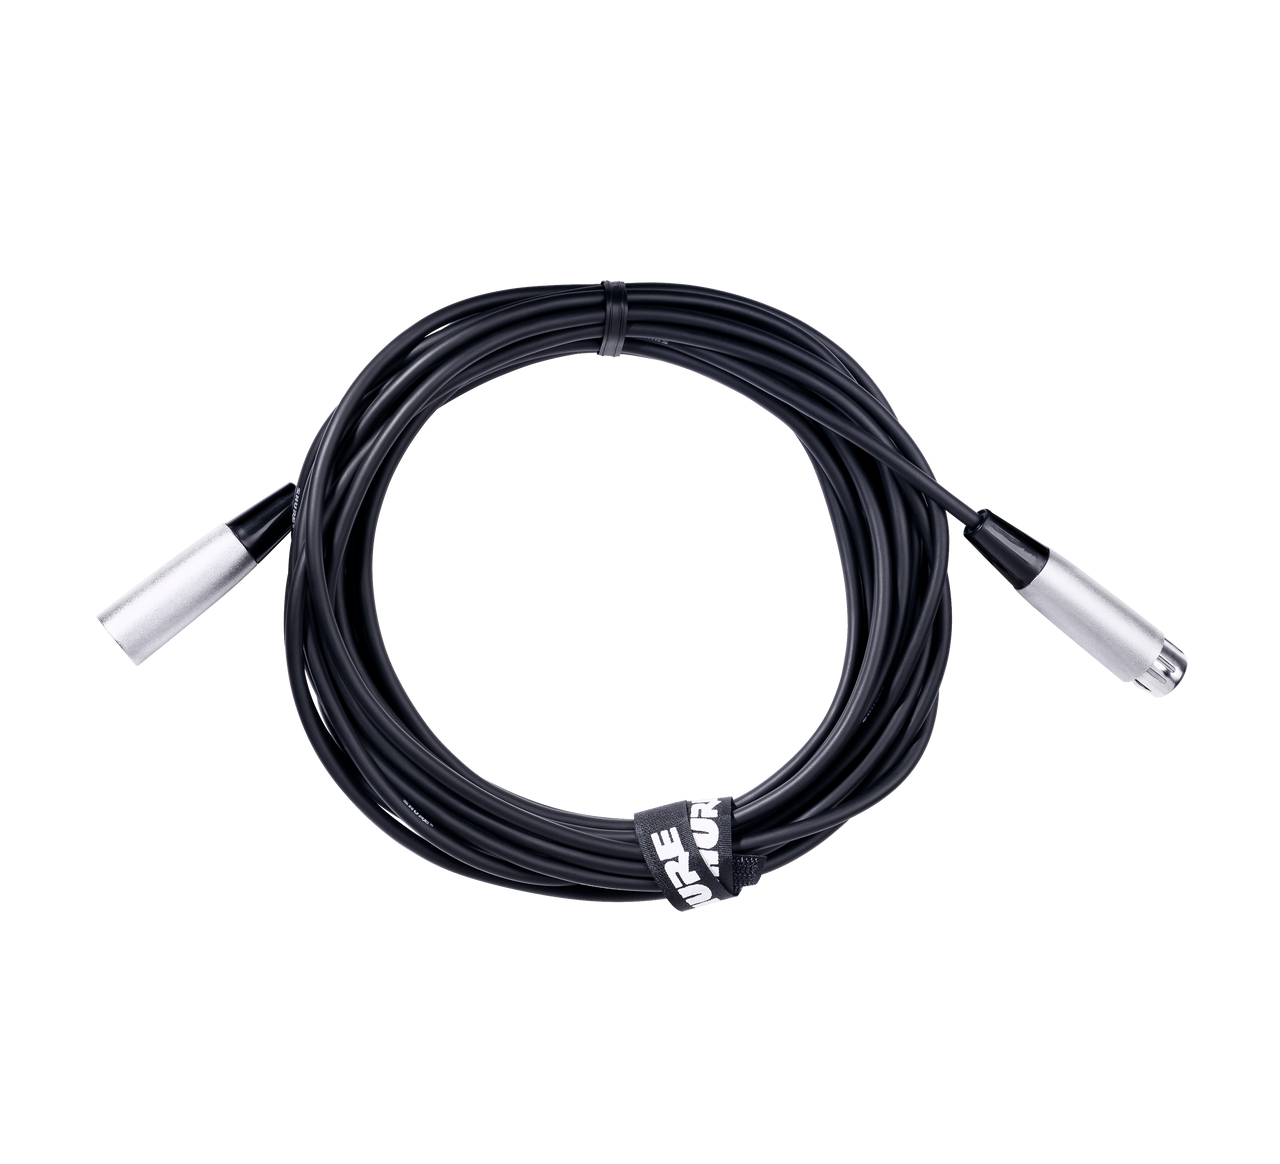 Rode XLR-6M Black Premium XLR Cable, 6m